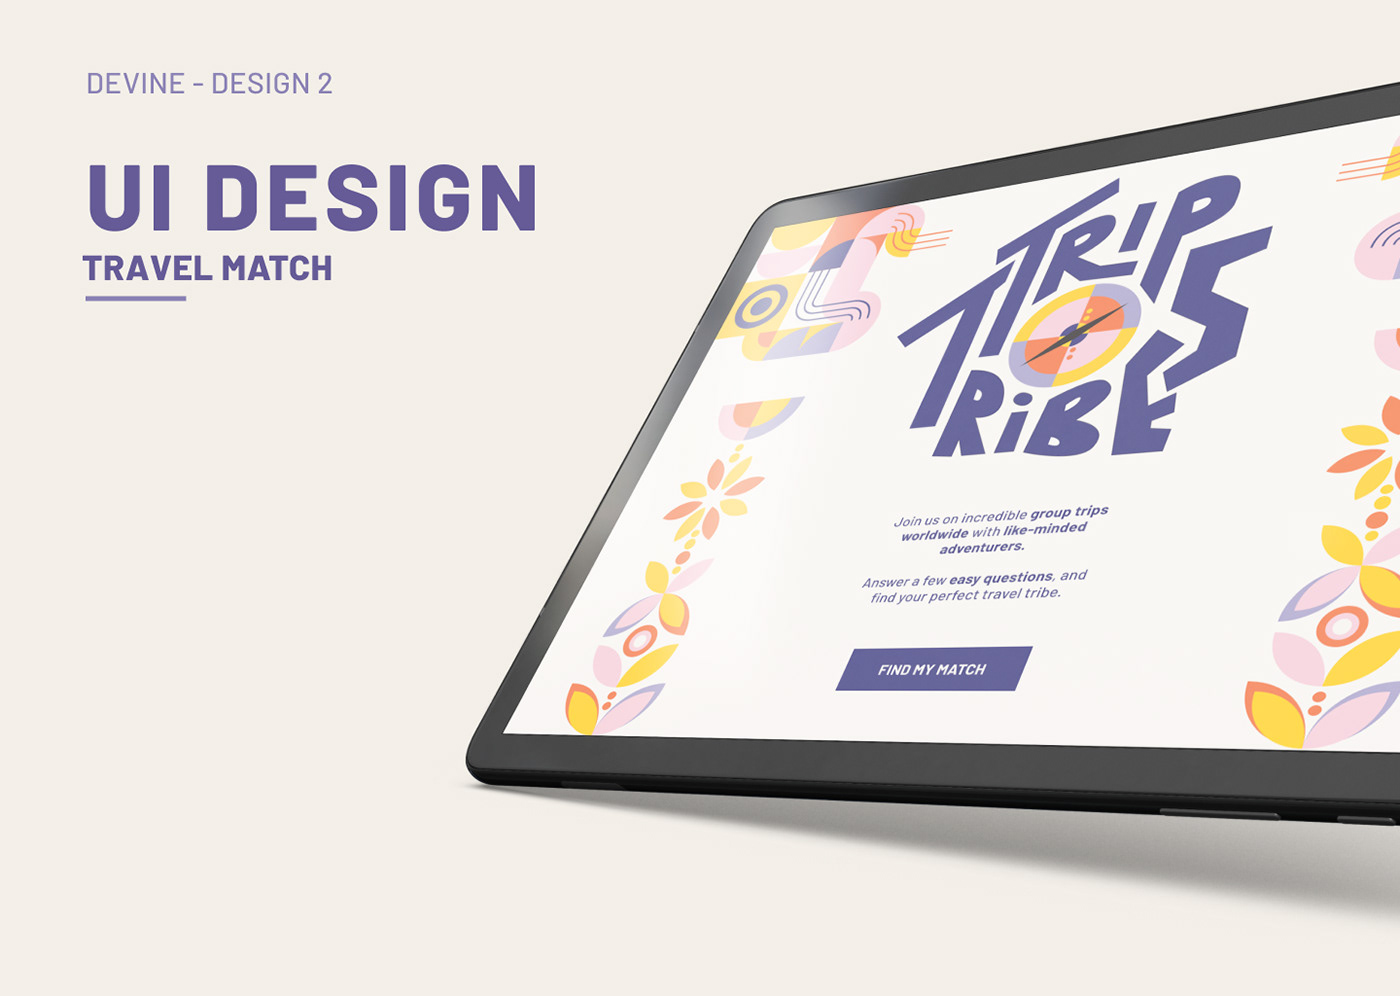 Figma ipaddesign design Webdesign ui design